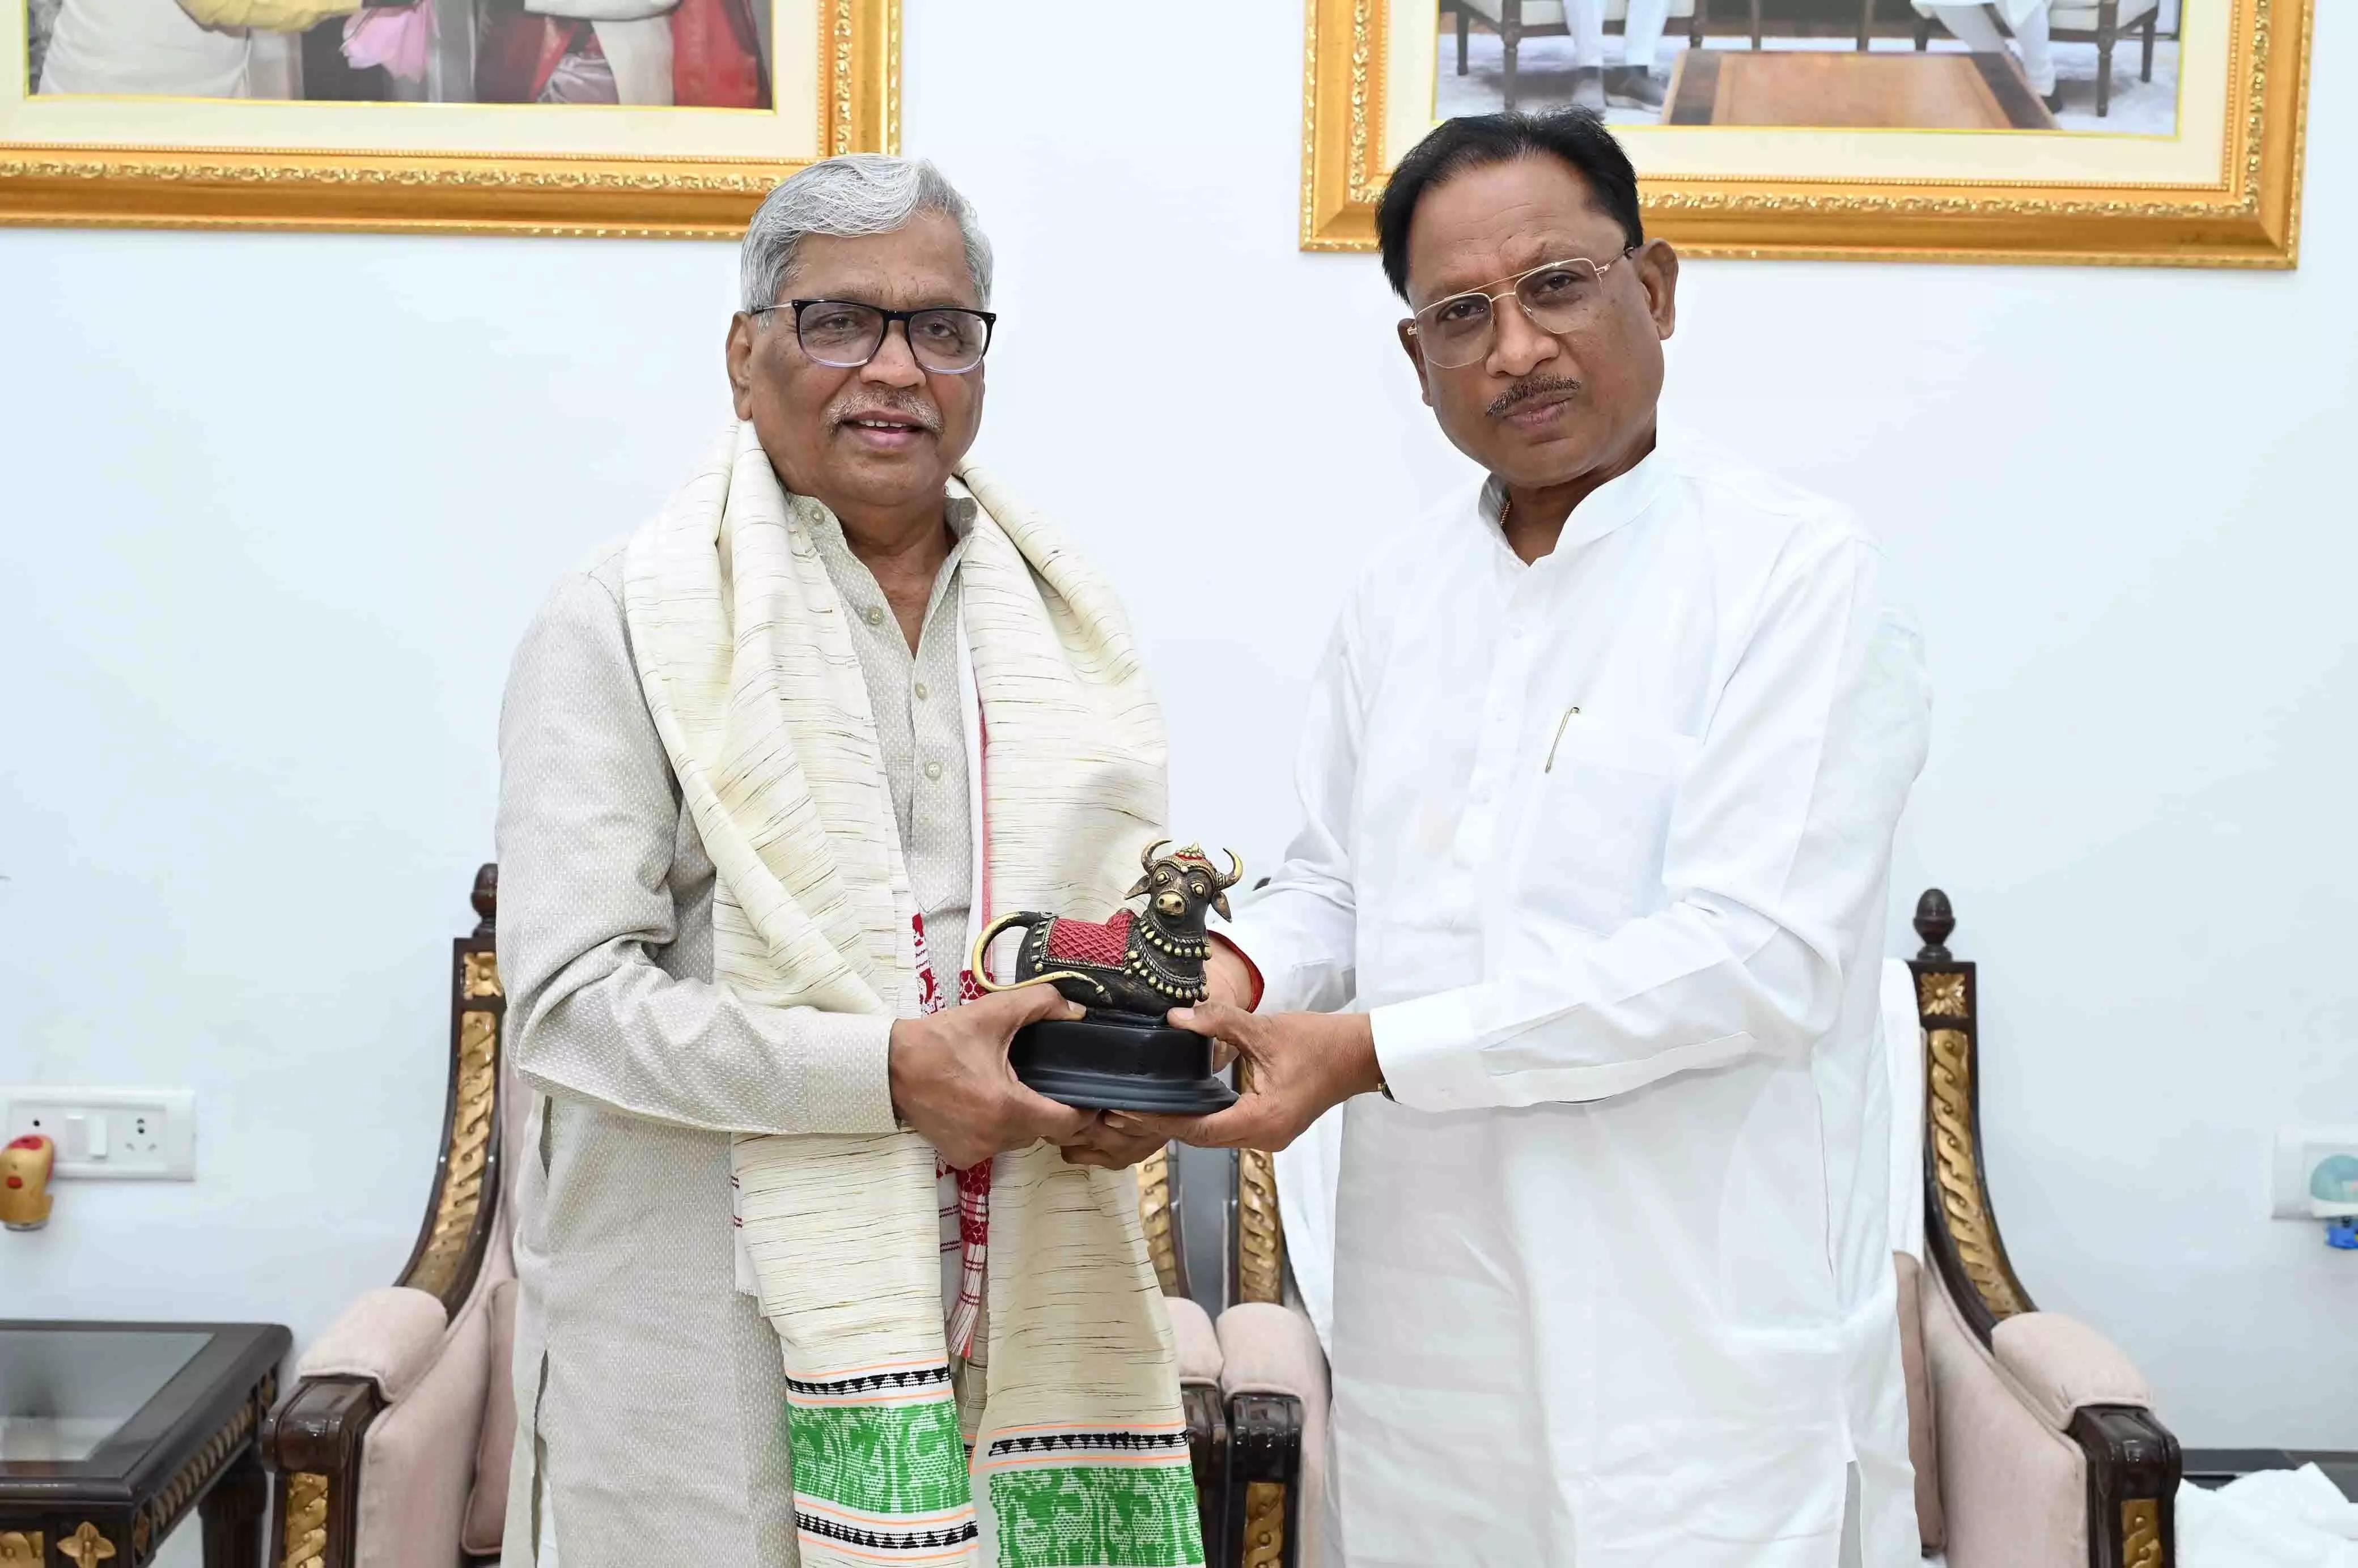 भाजपा के पूर्व राज्यसभा सांसद प्रभात झा ने की मुख्यमंत्री विष्णु देव साय से मुलाकात